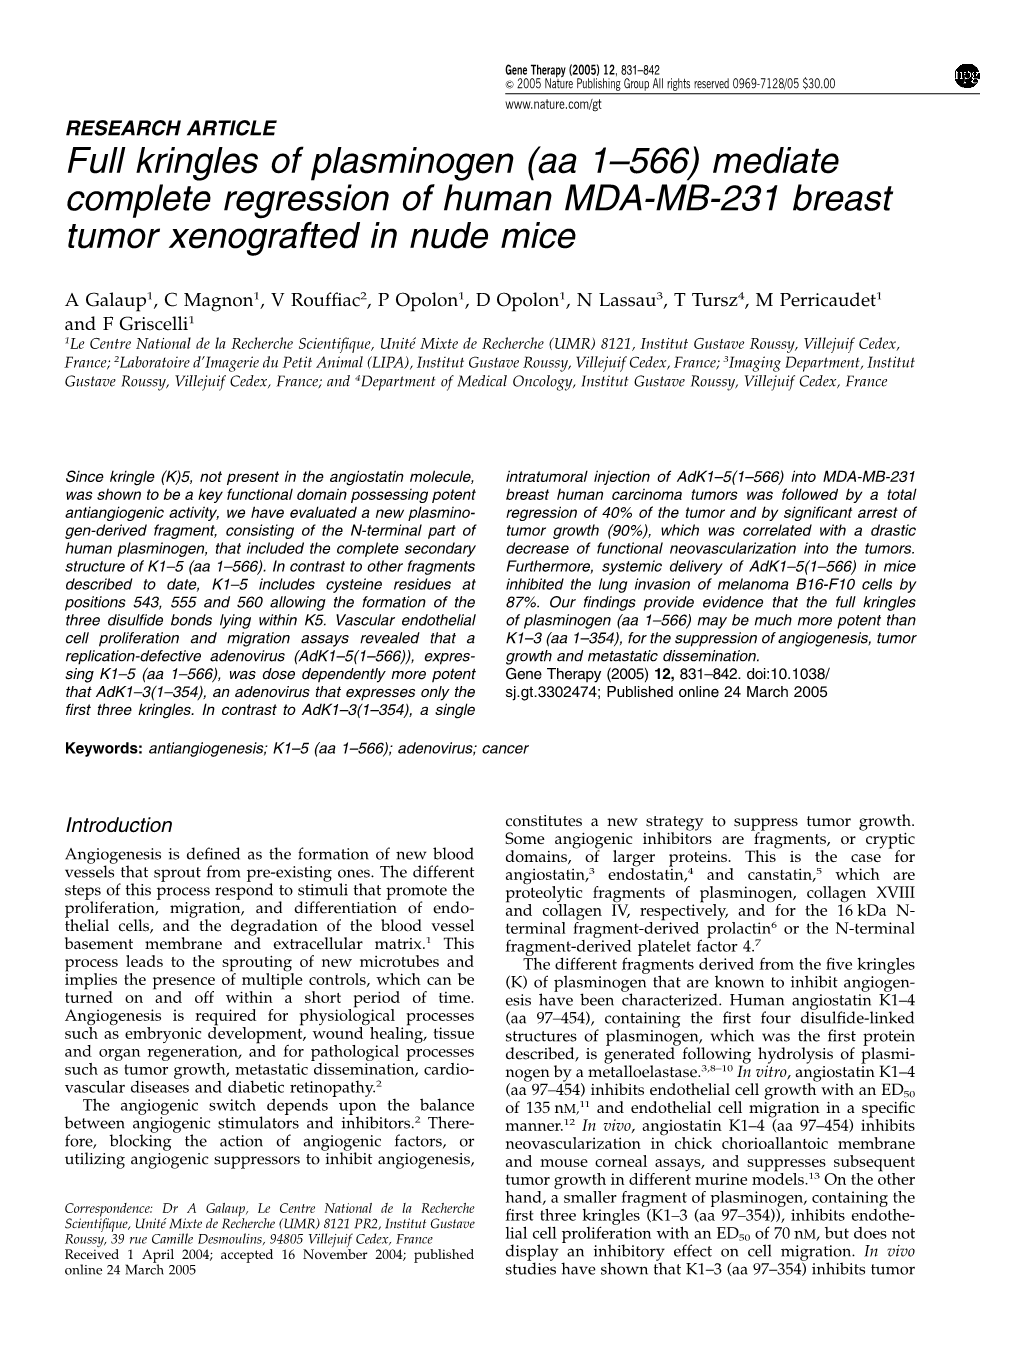 Full Kringles of Plasminogen (Aa 1–566) Mediate Complete Regression of Human MDA-MB-231 Breast Tumor Xenografted in Nude Mice